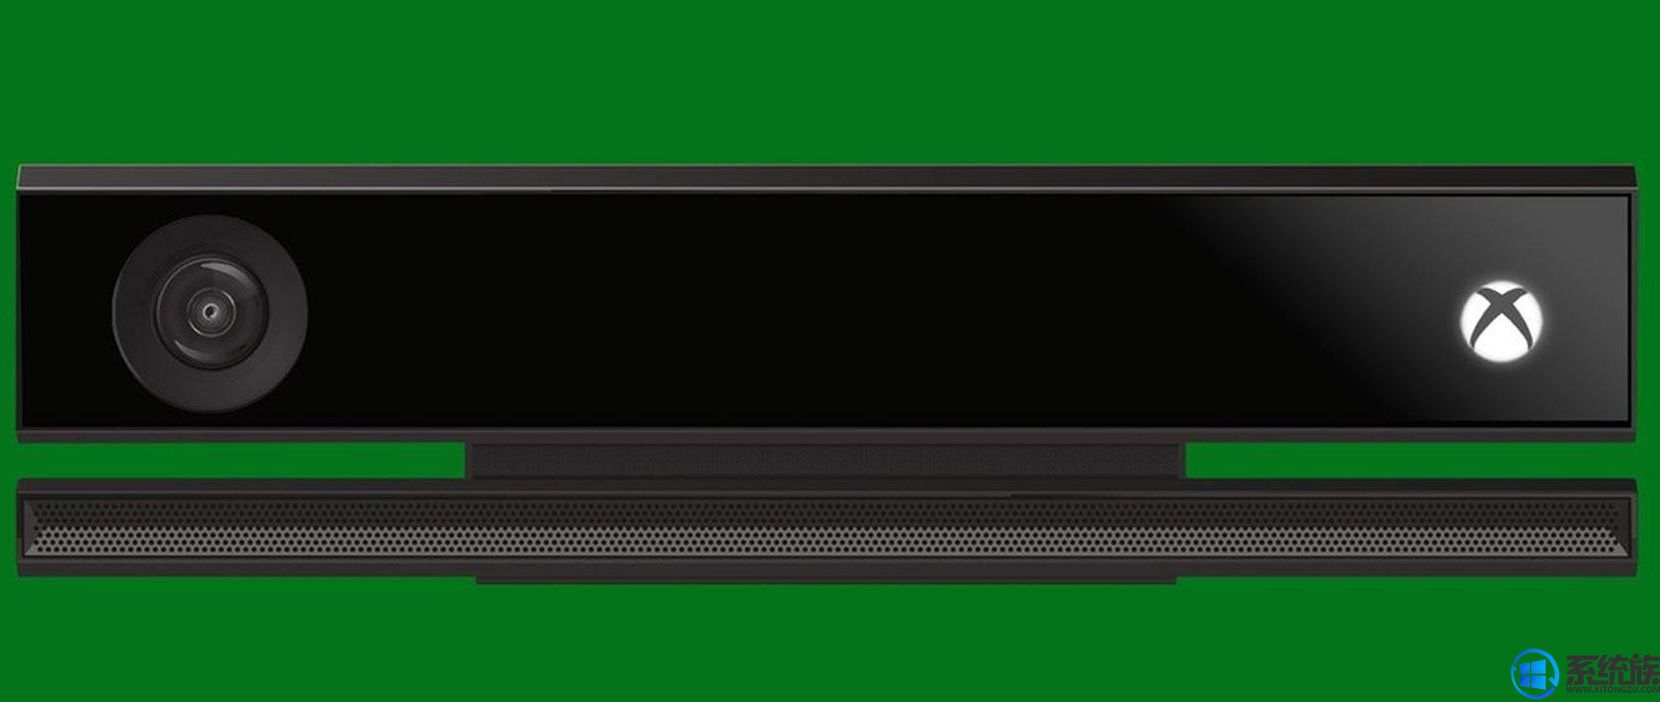 Kinect 适配器正式退出历史舞台